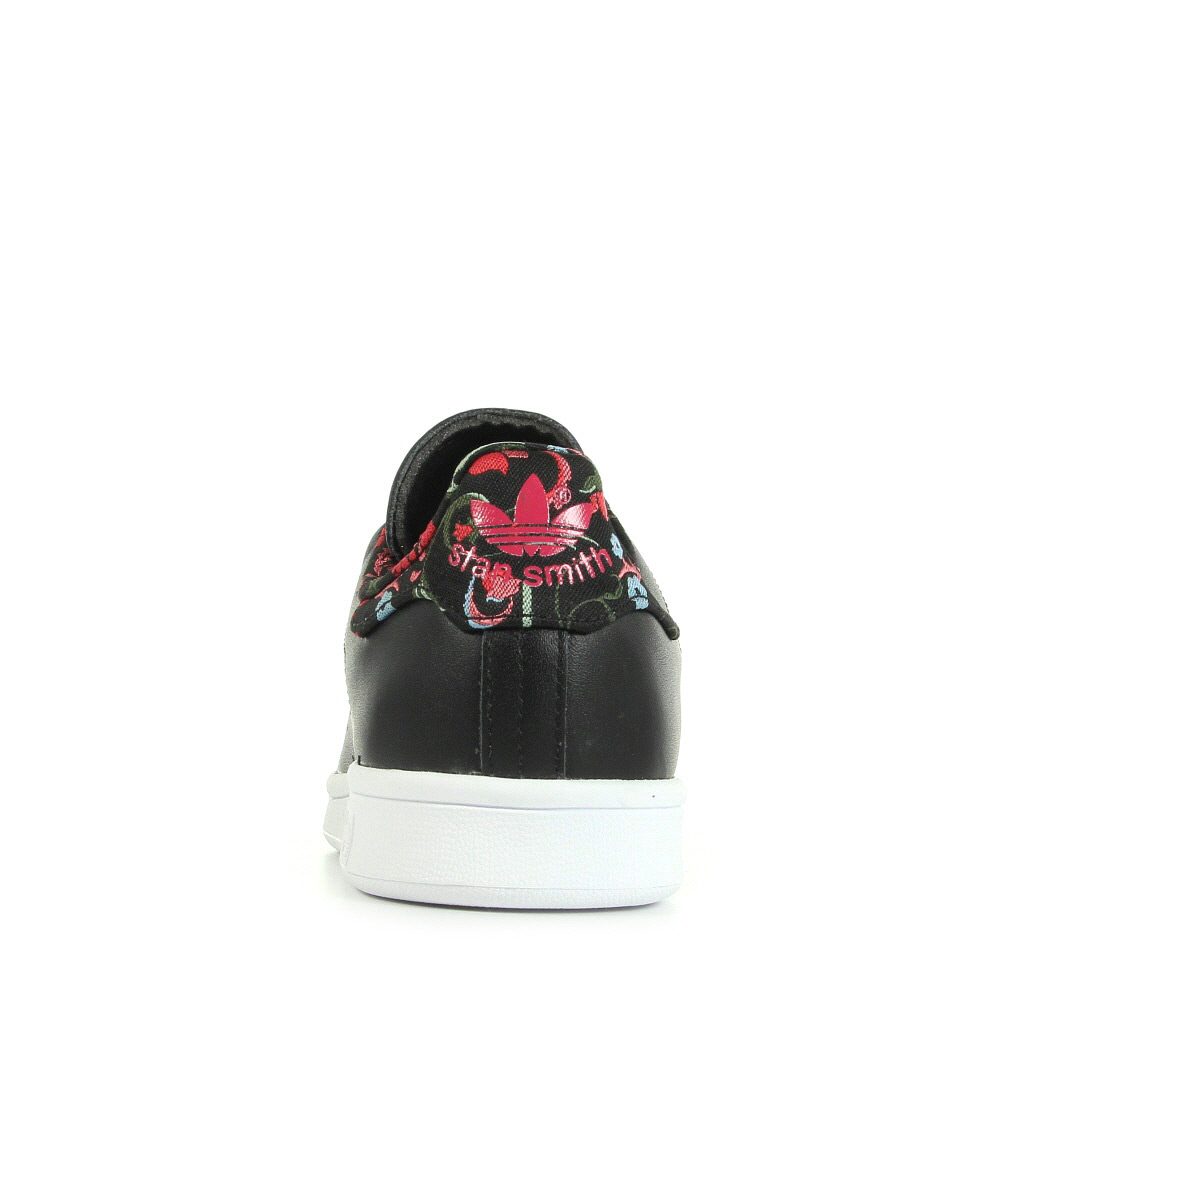 Chaussures Baskets Adidas Femme Stan Smith W Taille Noir Noire Cuir